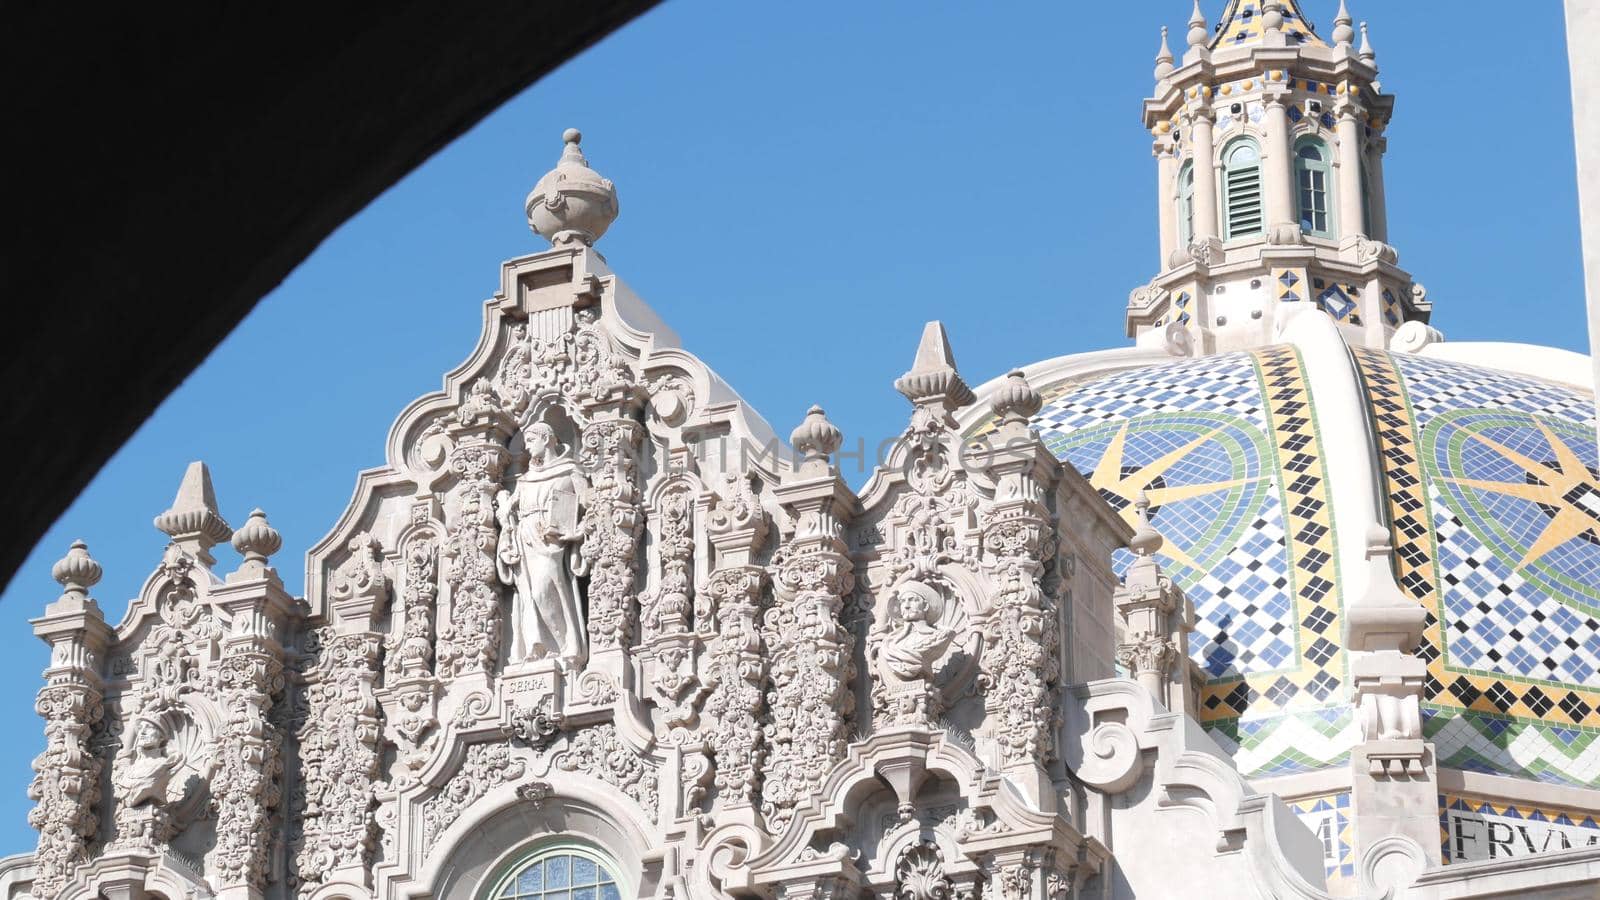 Spanish colonial revival architecture, mosaic dome cupola, San Diego Balboa Park by DogoraSun